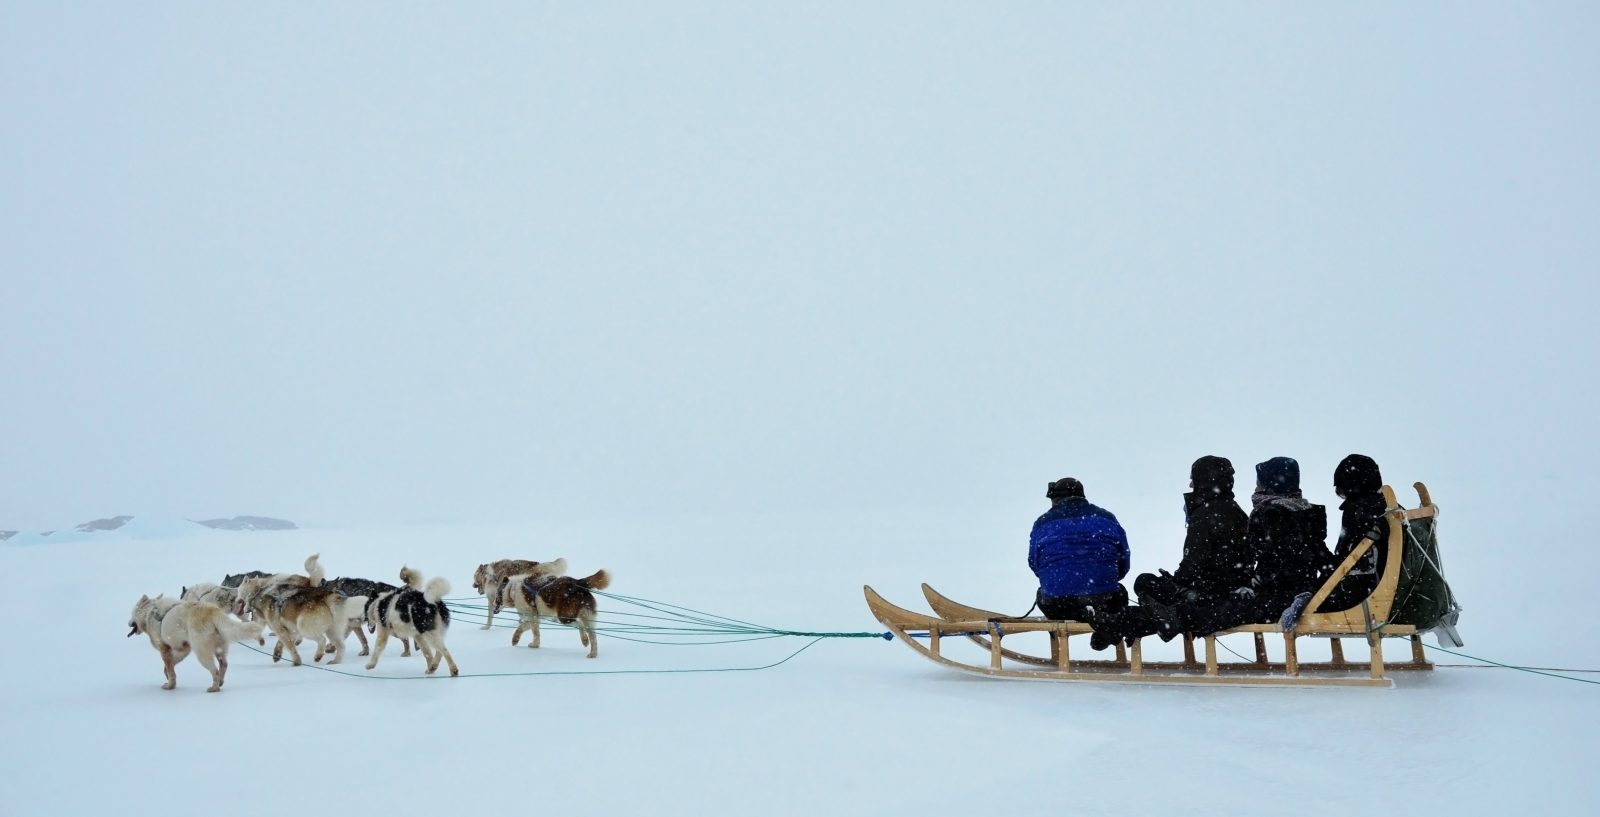 Indigenous communities: The Inuit